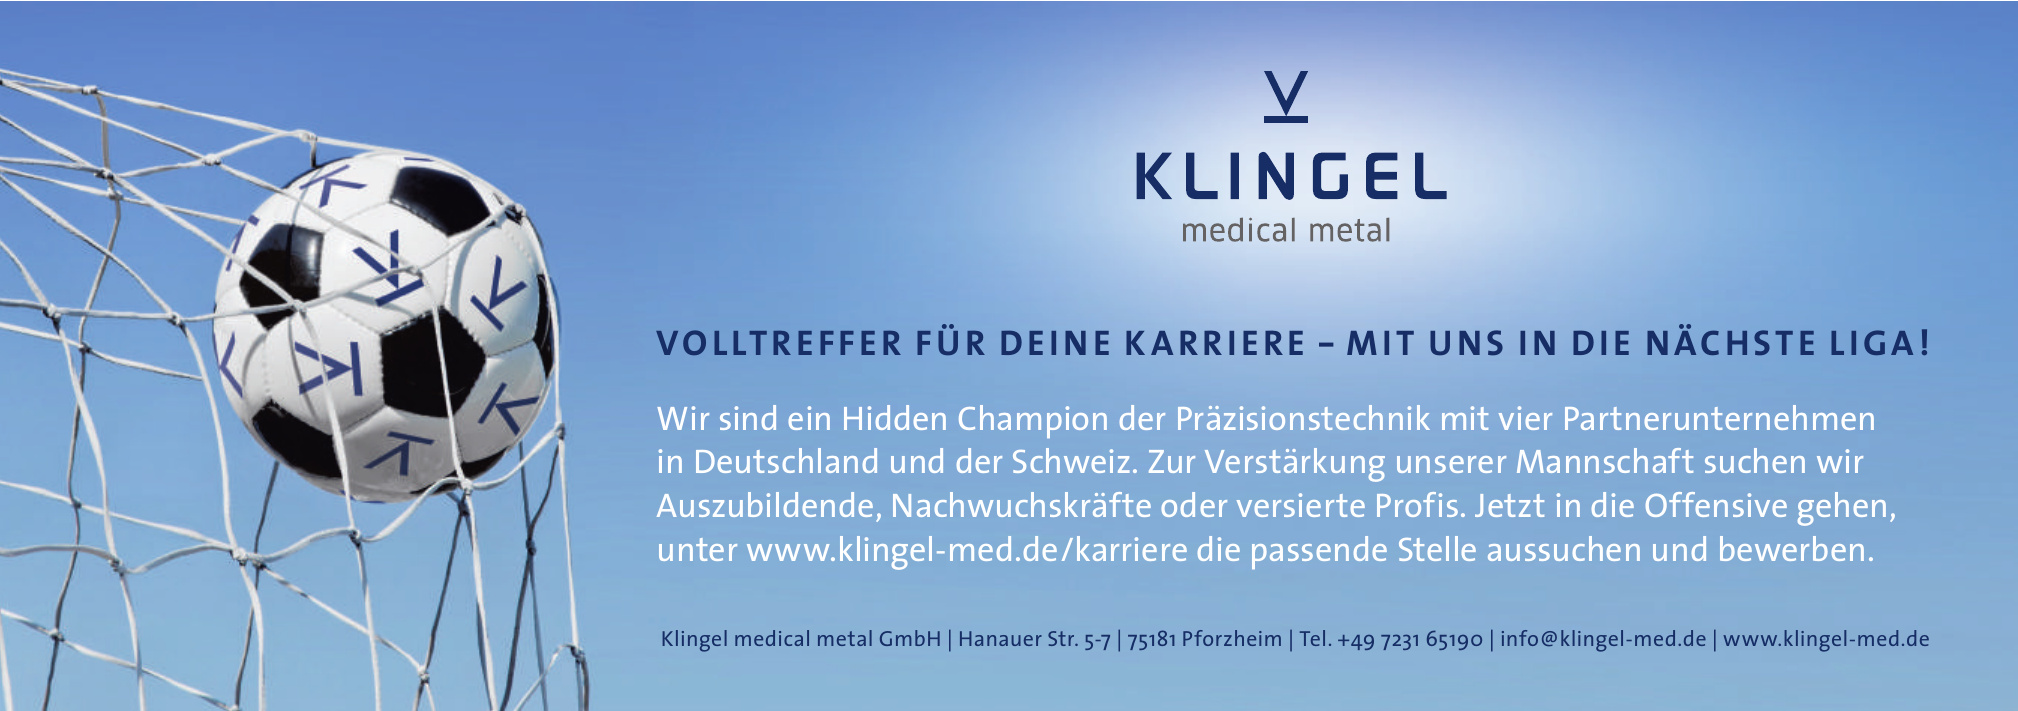 Klingel medical metal GmbH 